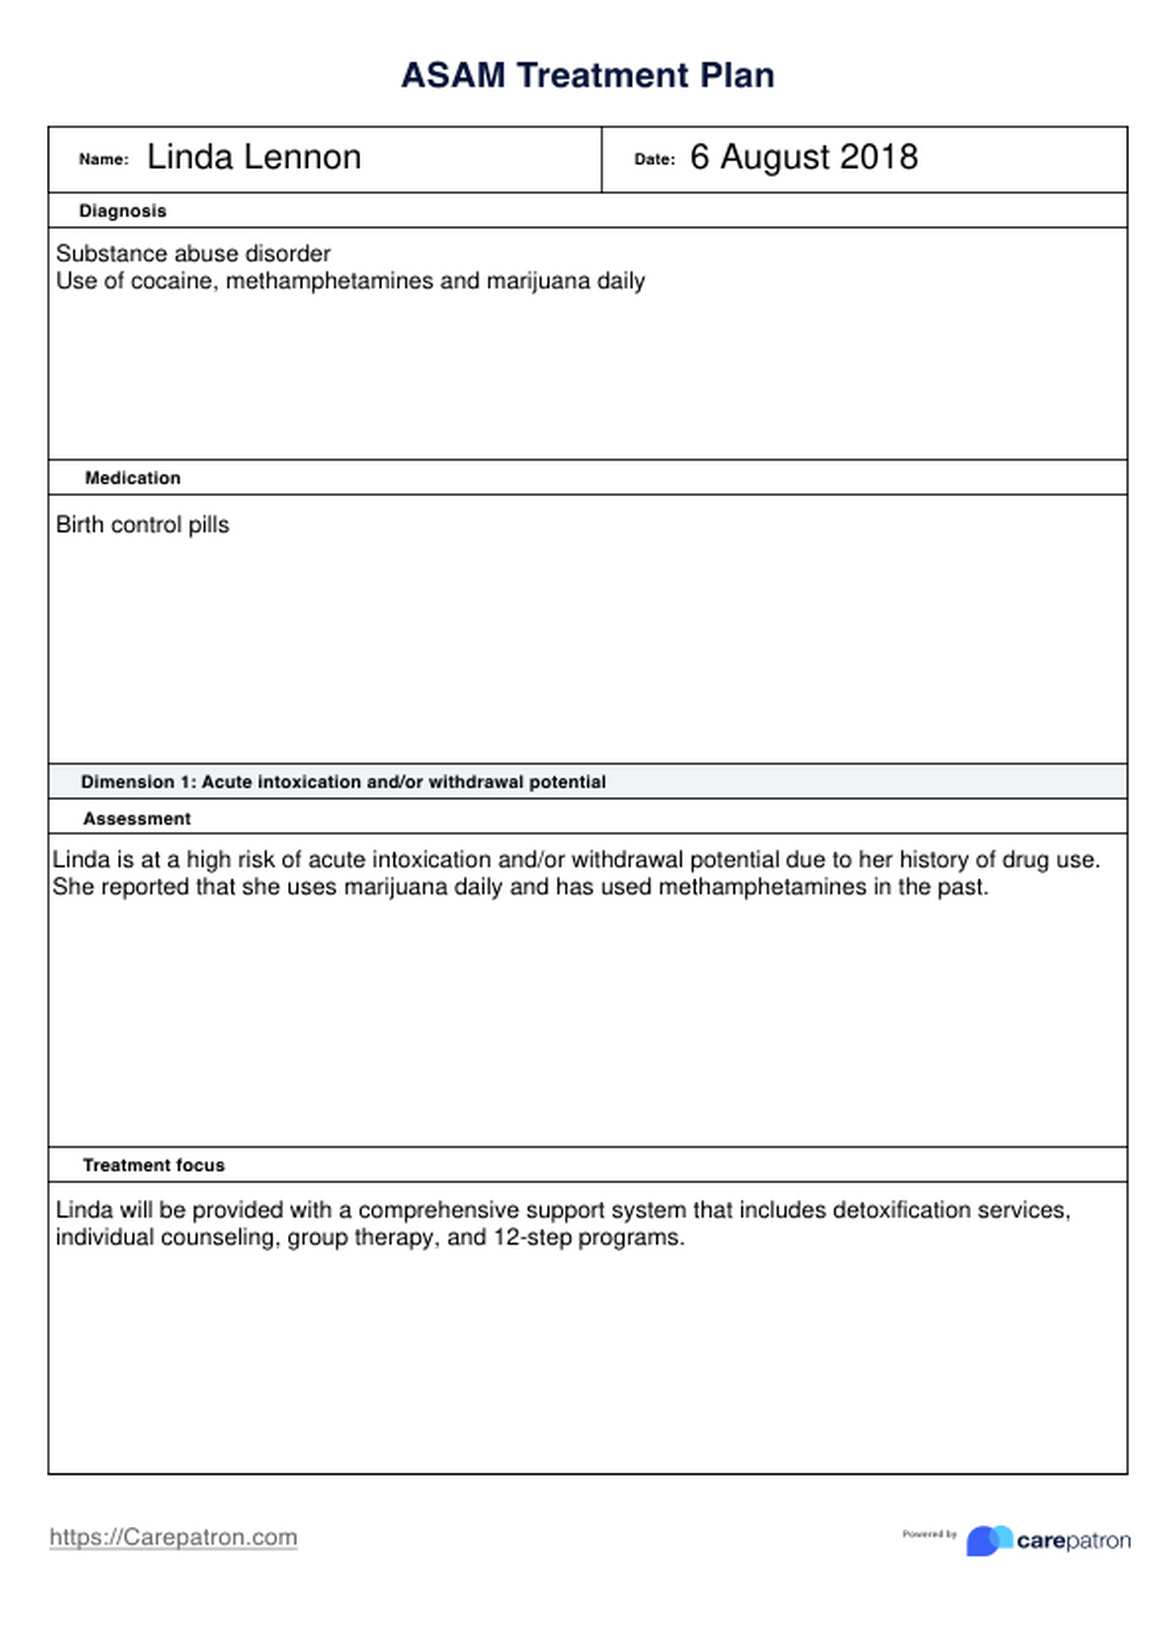 ASAM Dimensions Treatment Plan PDF Example